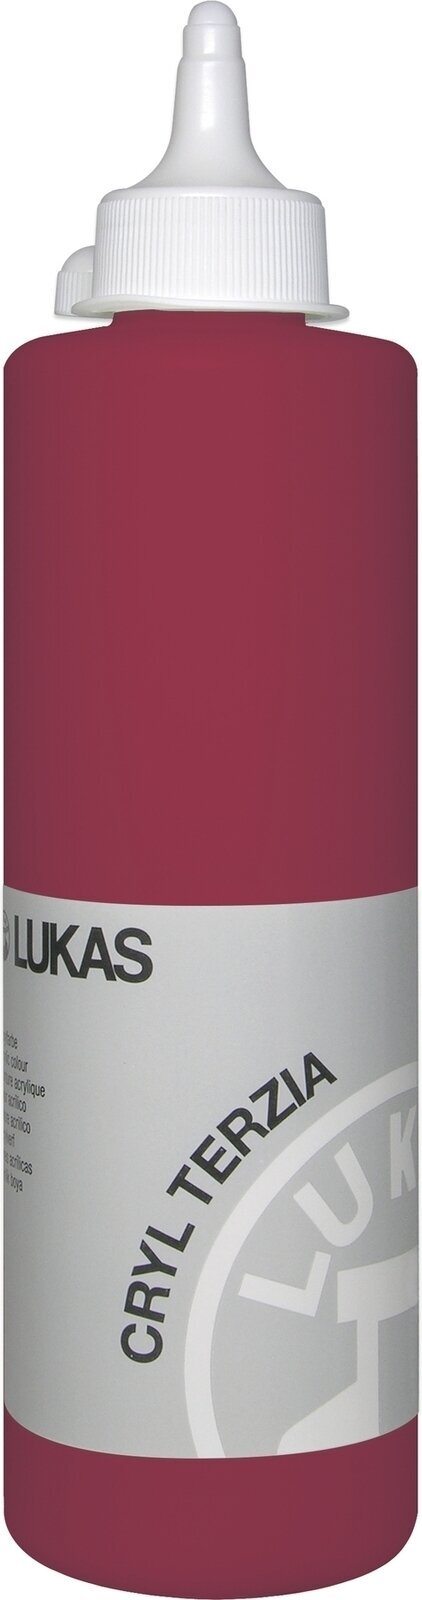 Tinta acrílica Lukas Cryl Terzia Tinta acrílica 500 ml Alizarin Crimson